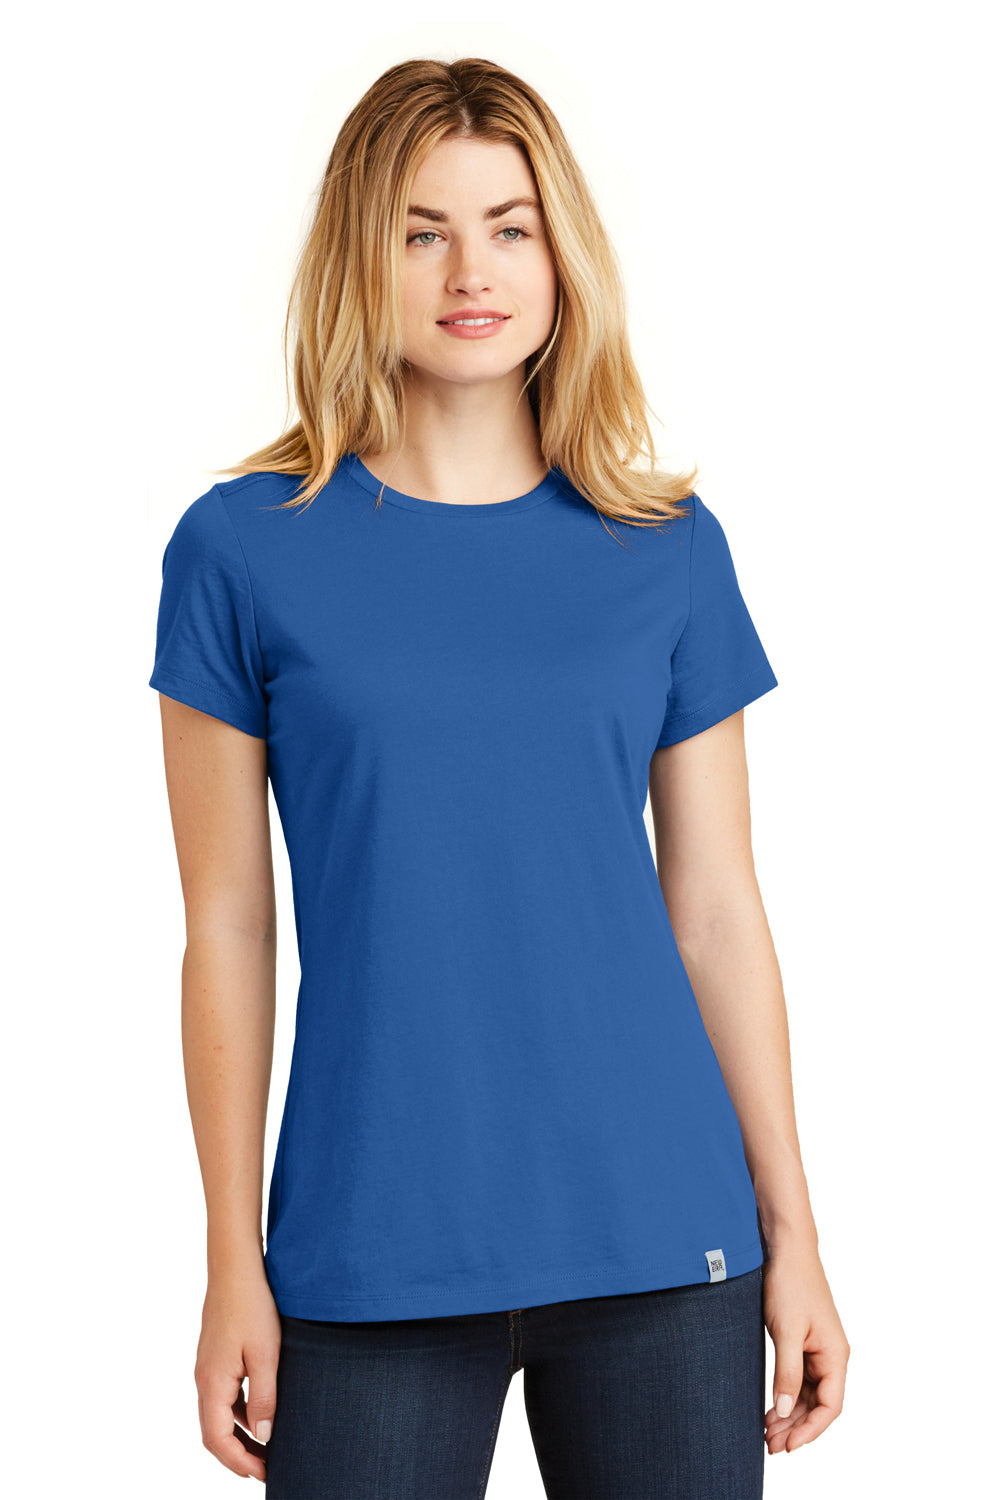 New Era LNEA100 Womens Heritage Short Sleeve Crewneck T-Shirt Royal Blue Front